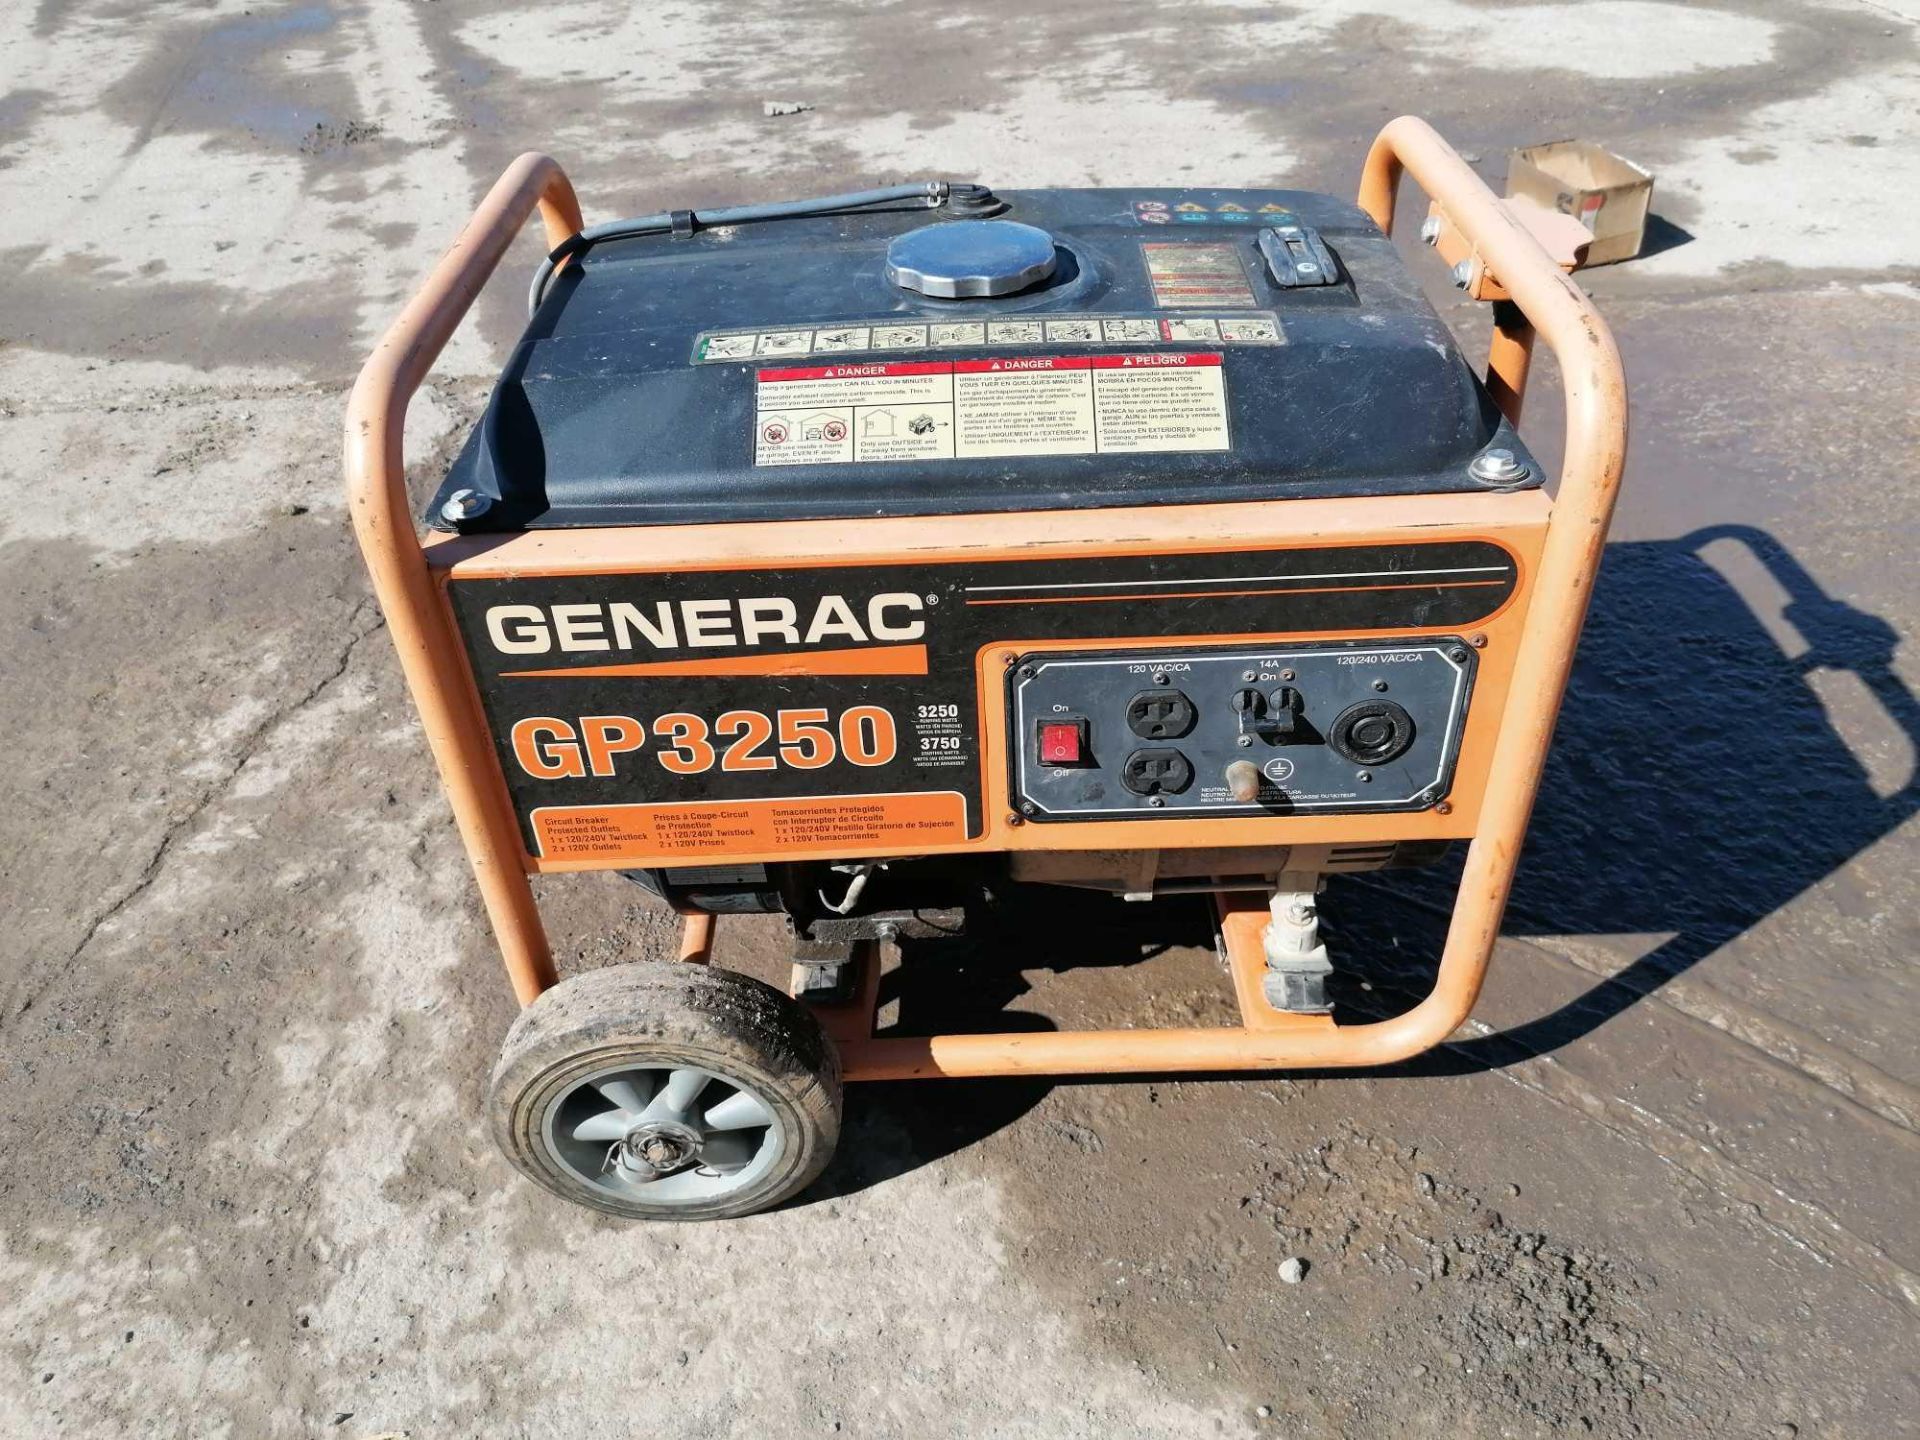 GENERAC WheelHouse GP3250 Generator, Model 095821, Serial #9923395B. Located in Naperville, IL.